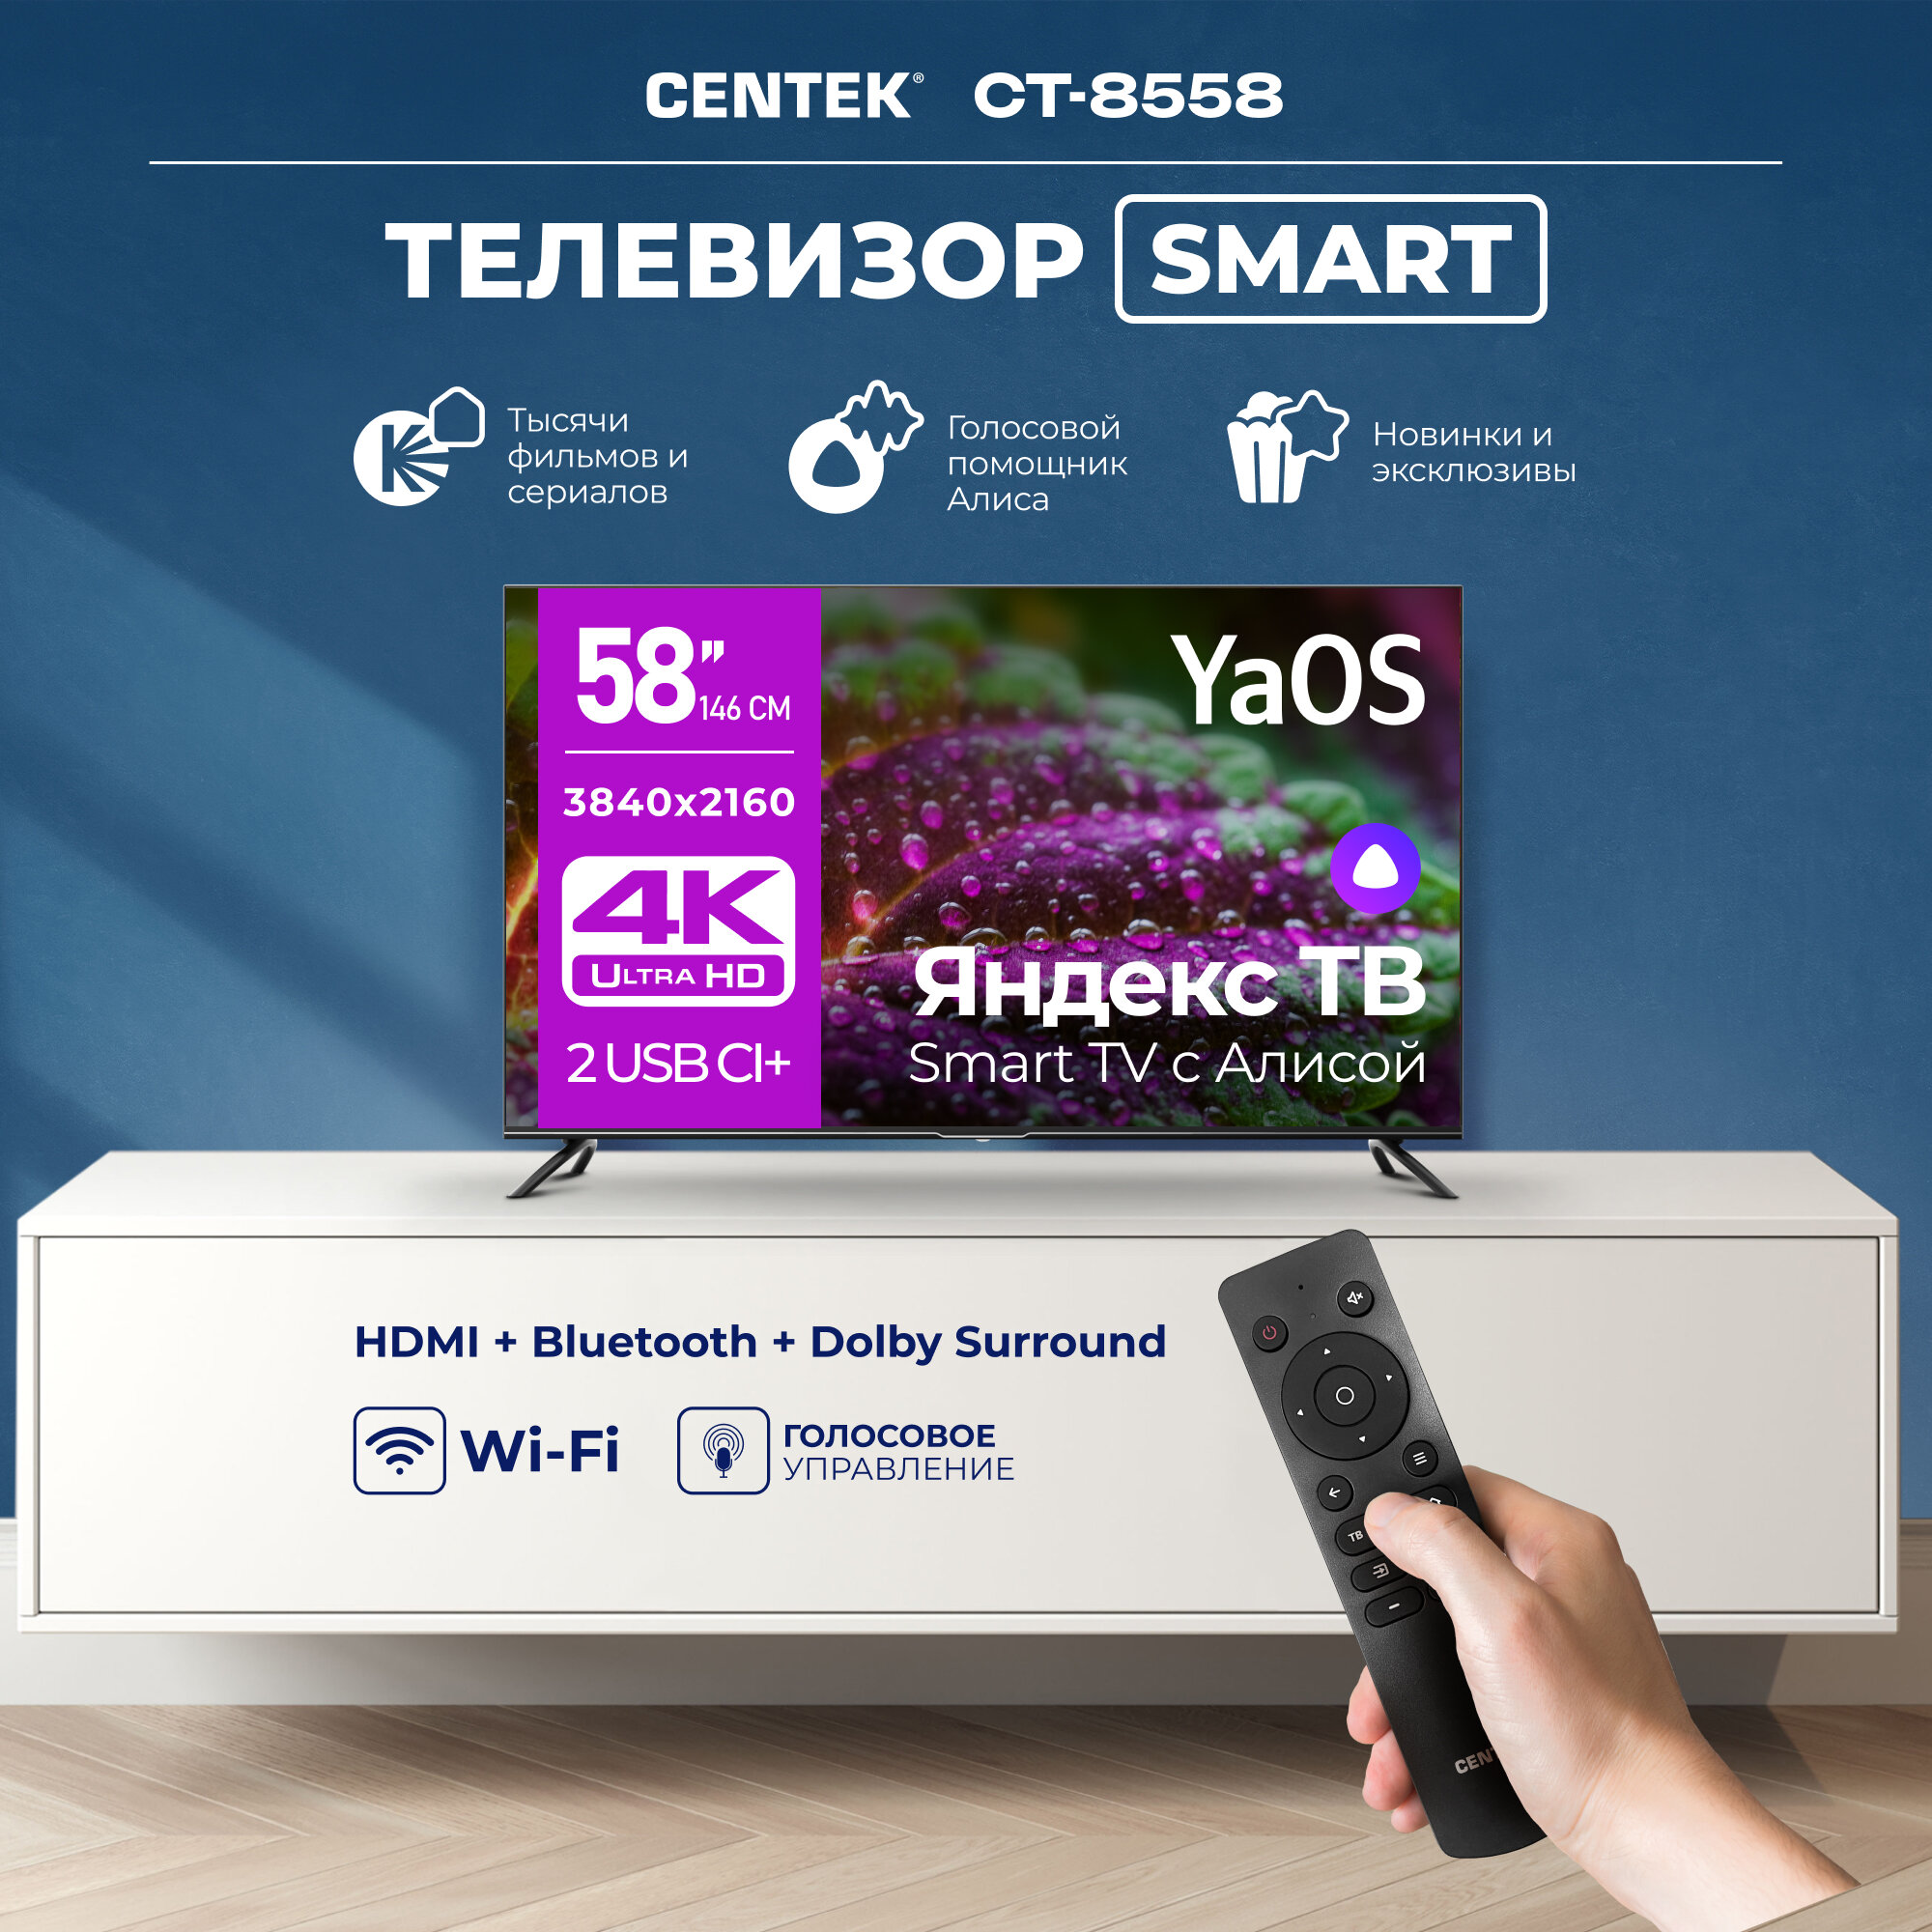 Телевизор Centek CT-8558, 58 дюймов с поддержкой 4К Ultra HD, Wi-Fi, Bluetooth, Яндекс YaOS